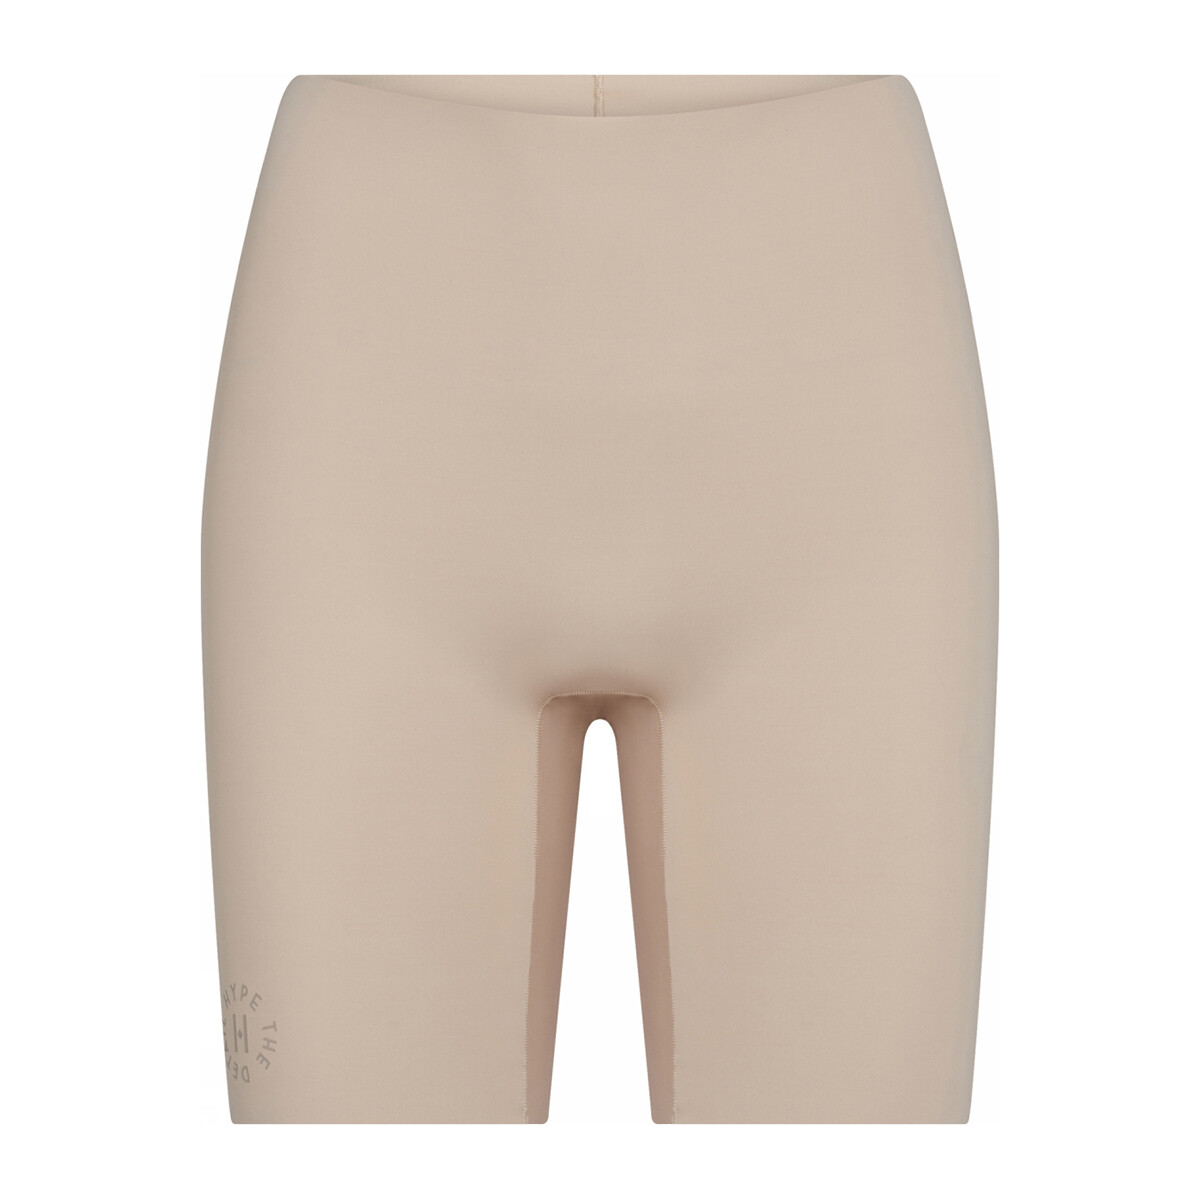 Se Hype The Detail Essentials Shorts, Farve: Beige, Størrelse: S, Dame hos Netlingeri.dk